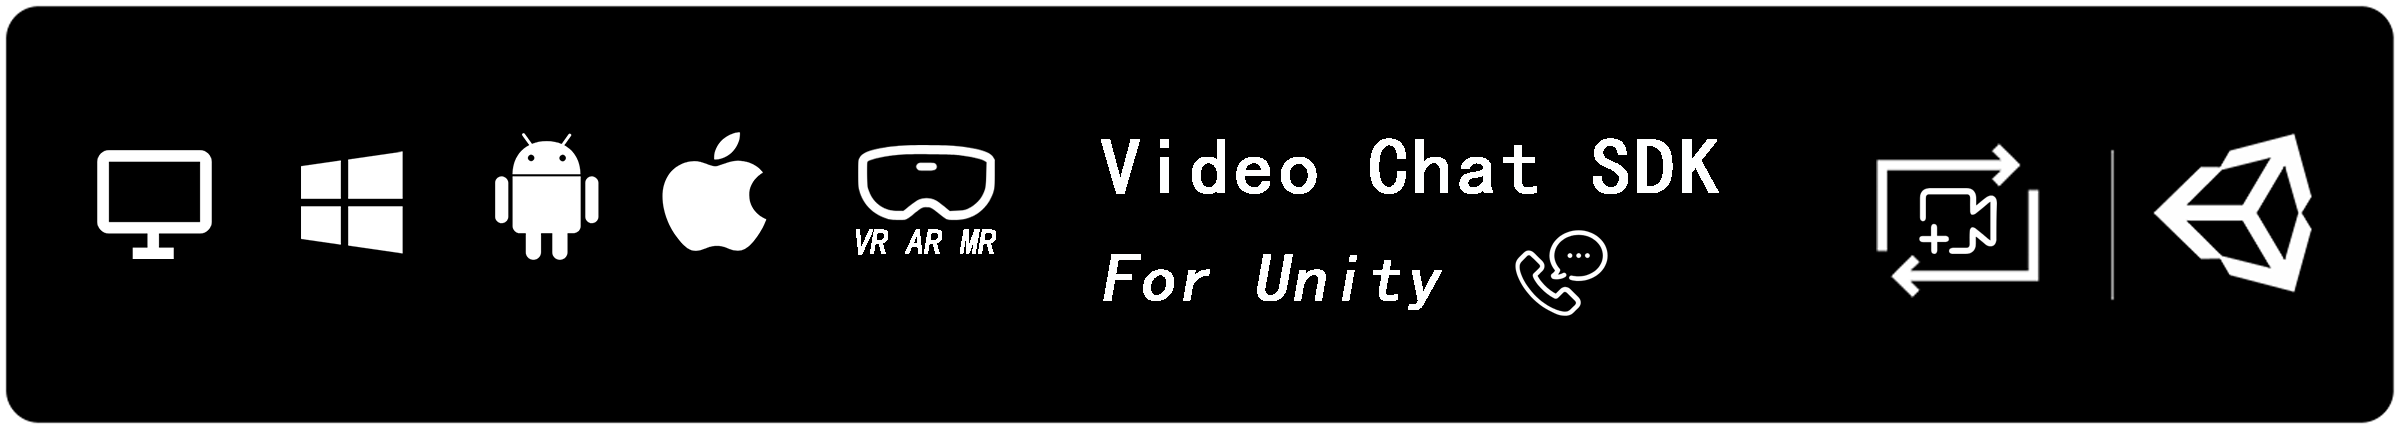 Unity Video Chat SDK